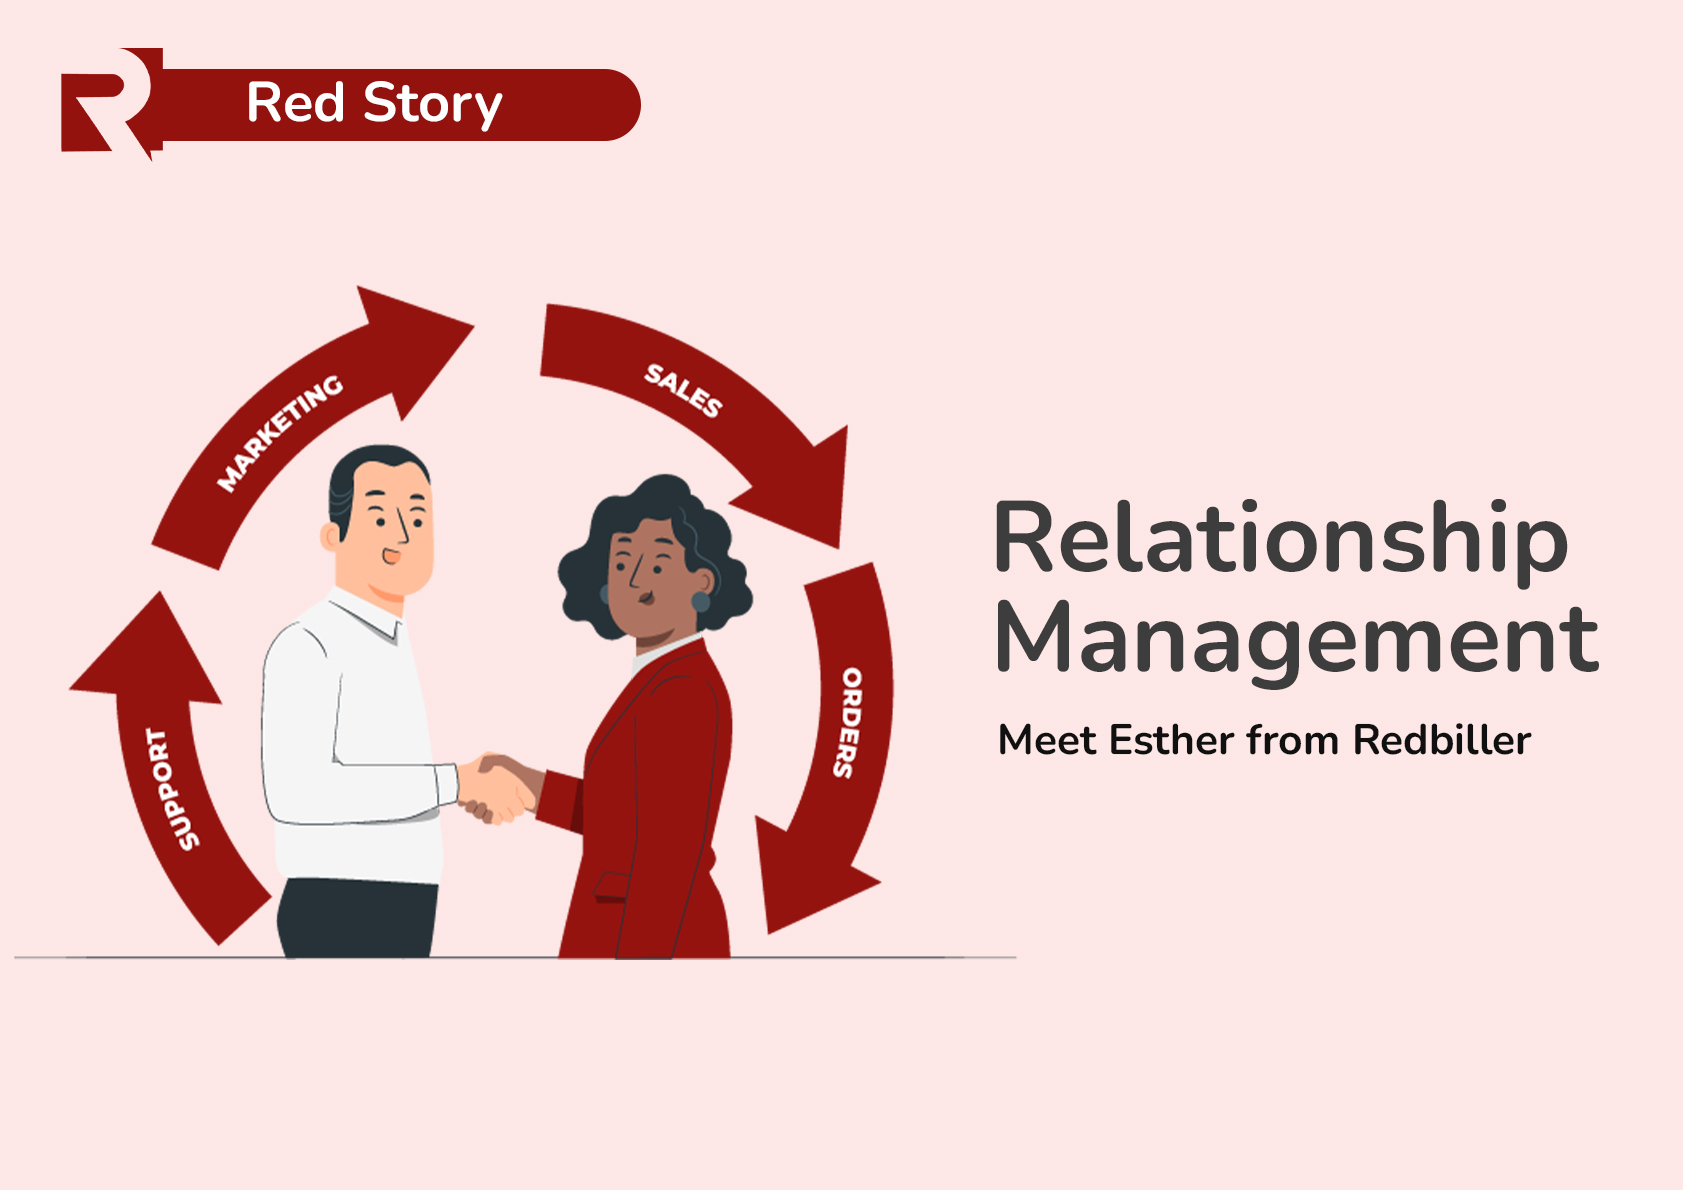 Relationship Management